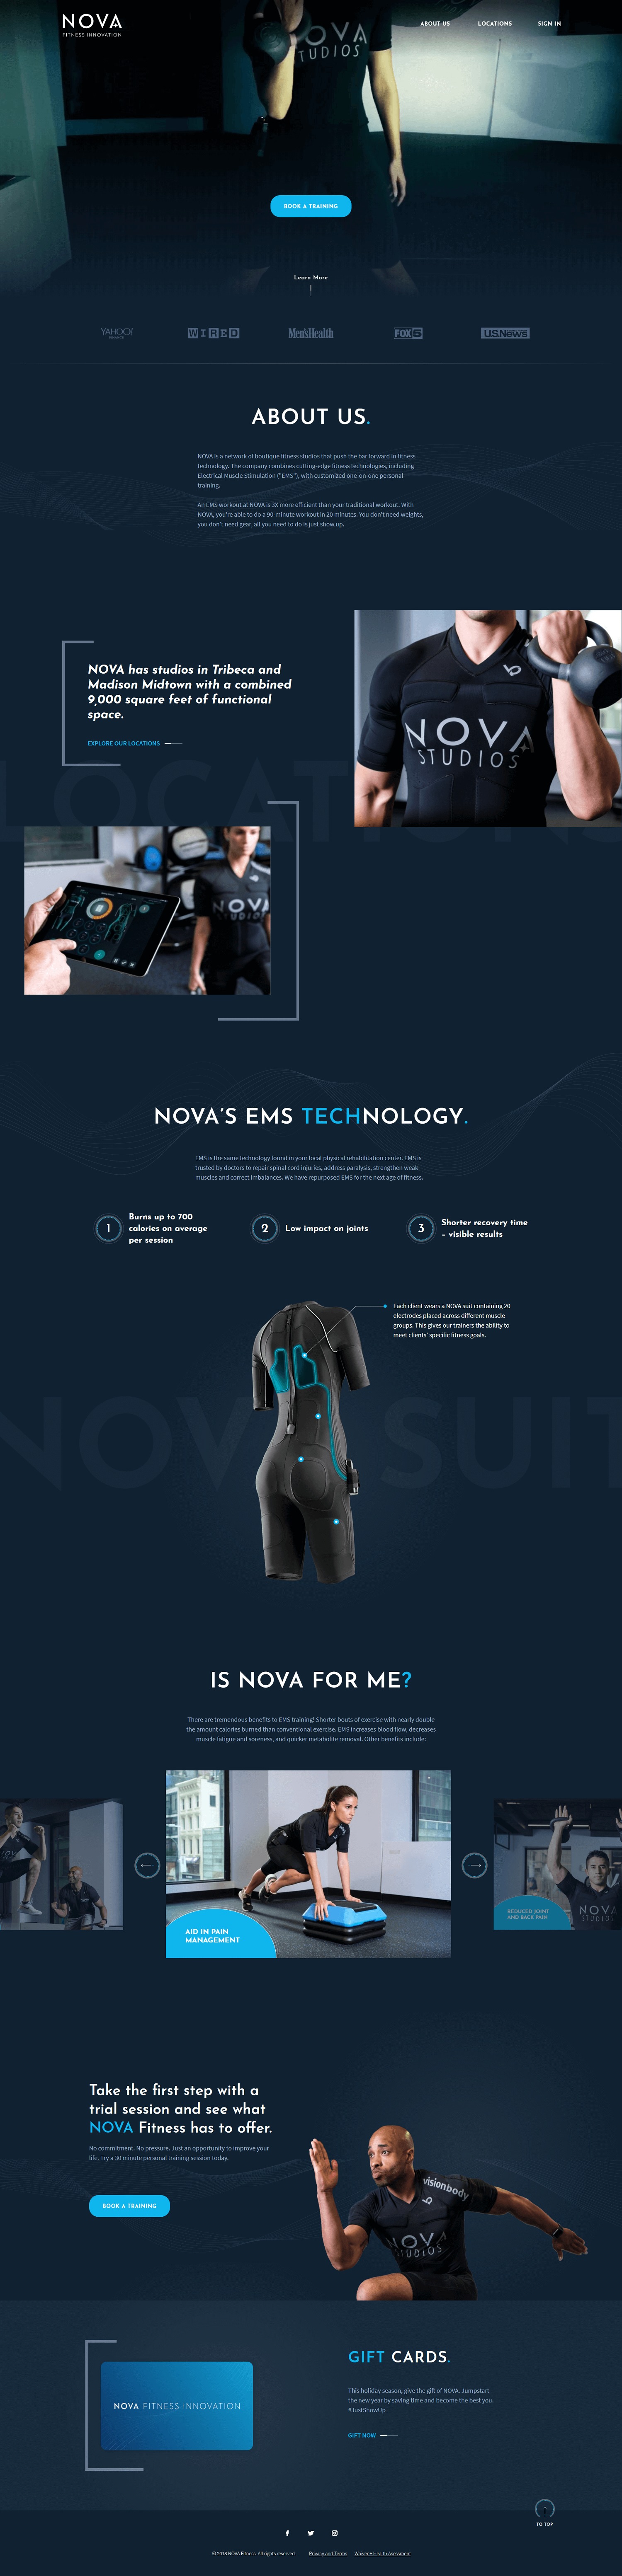 NOVA Fitness Home Page Design and Development